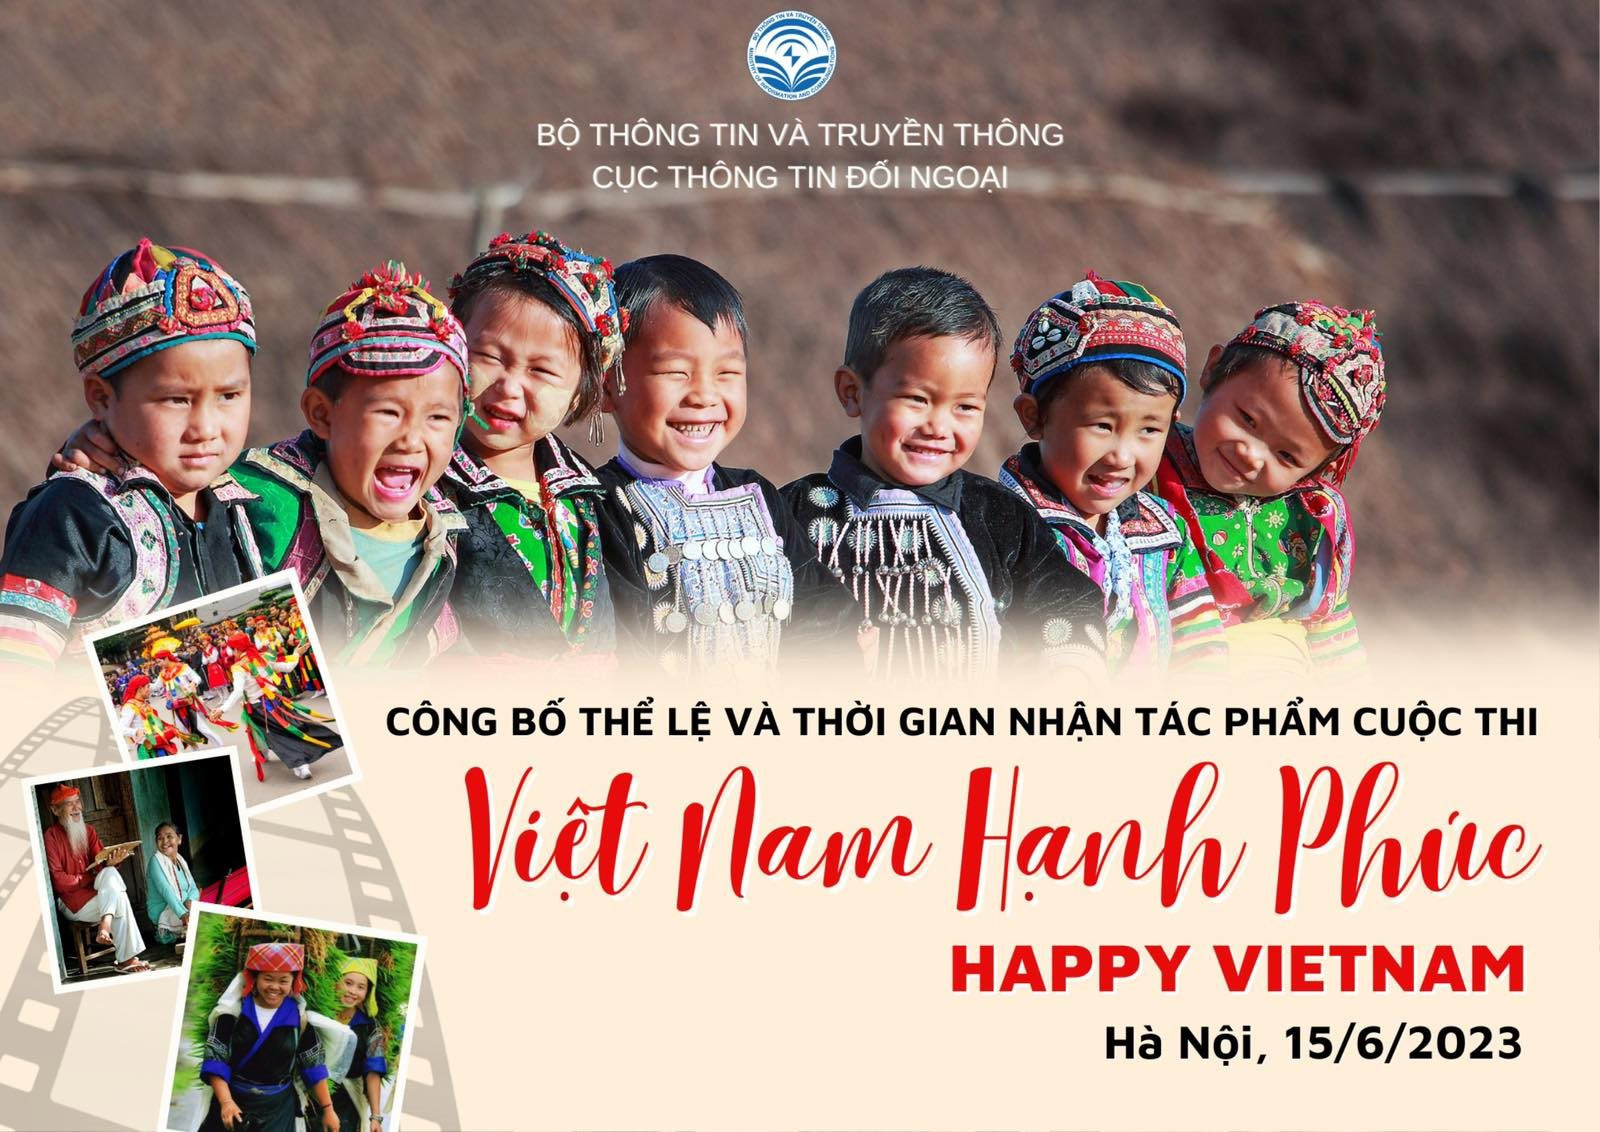 happyvietnam-official5.jpg